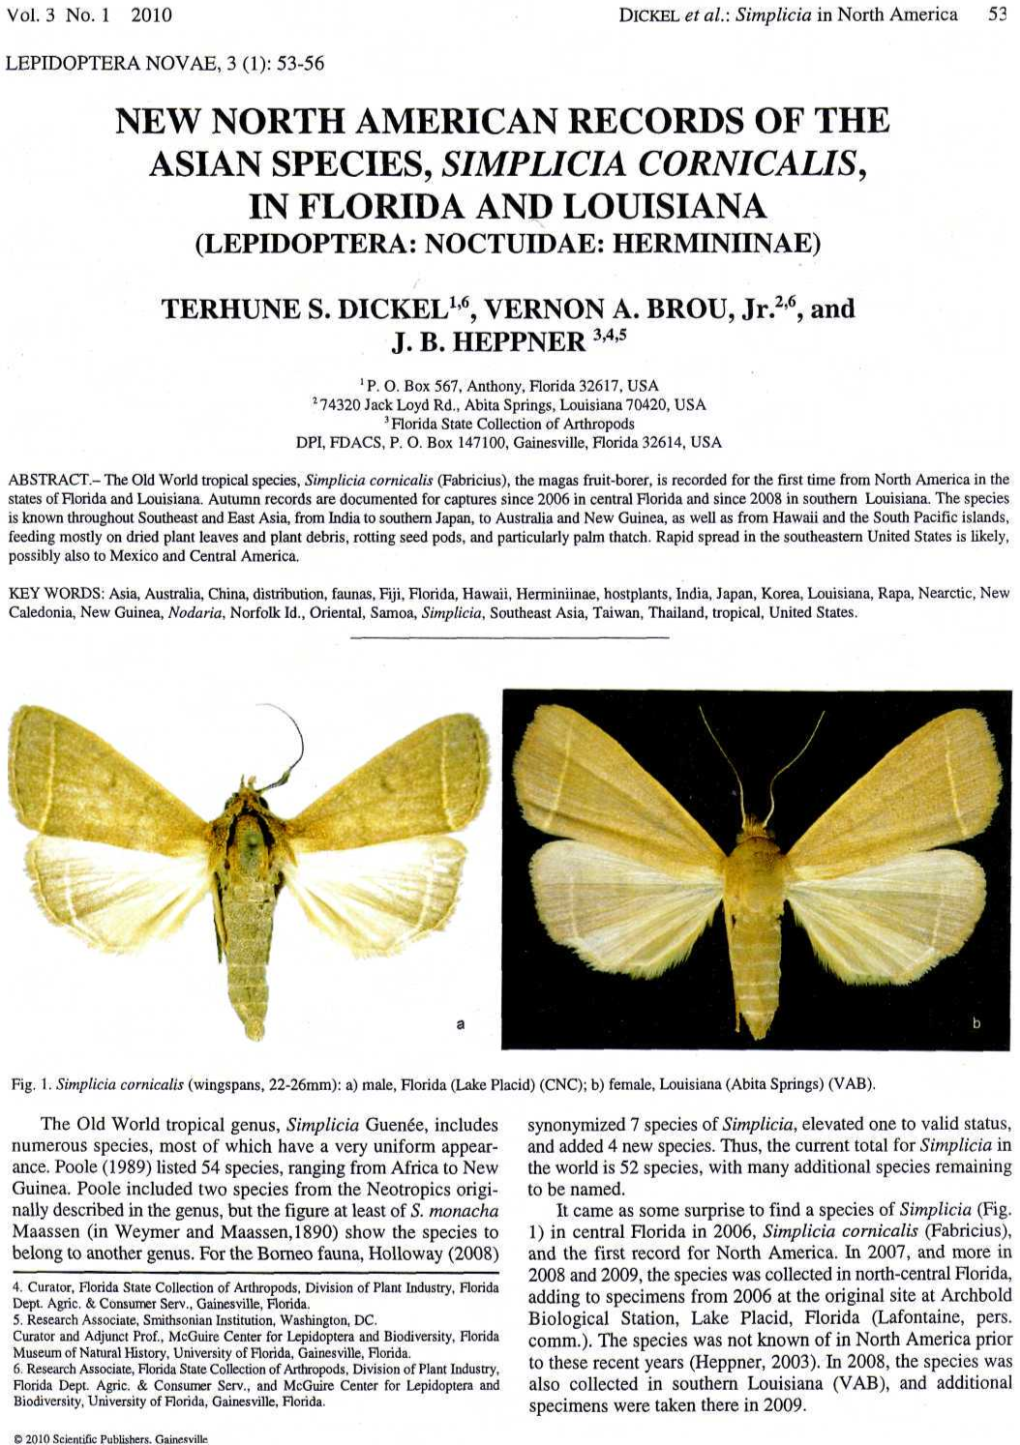 New North American Records of the Asian Species, Simplicia Cornicalis, in Florida and Louisiana (Lepidoptera: Noctuidae: Herminiinae) / - Terhune S